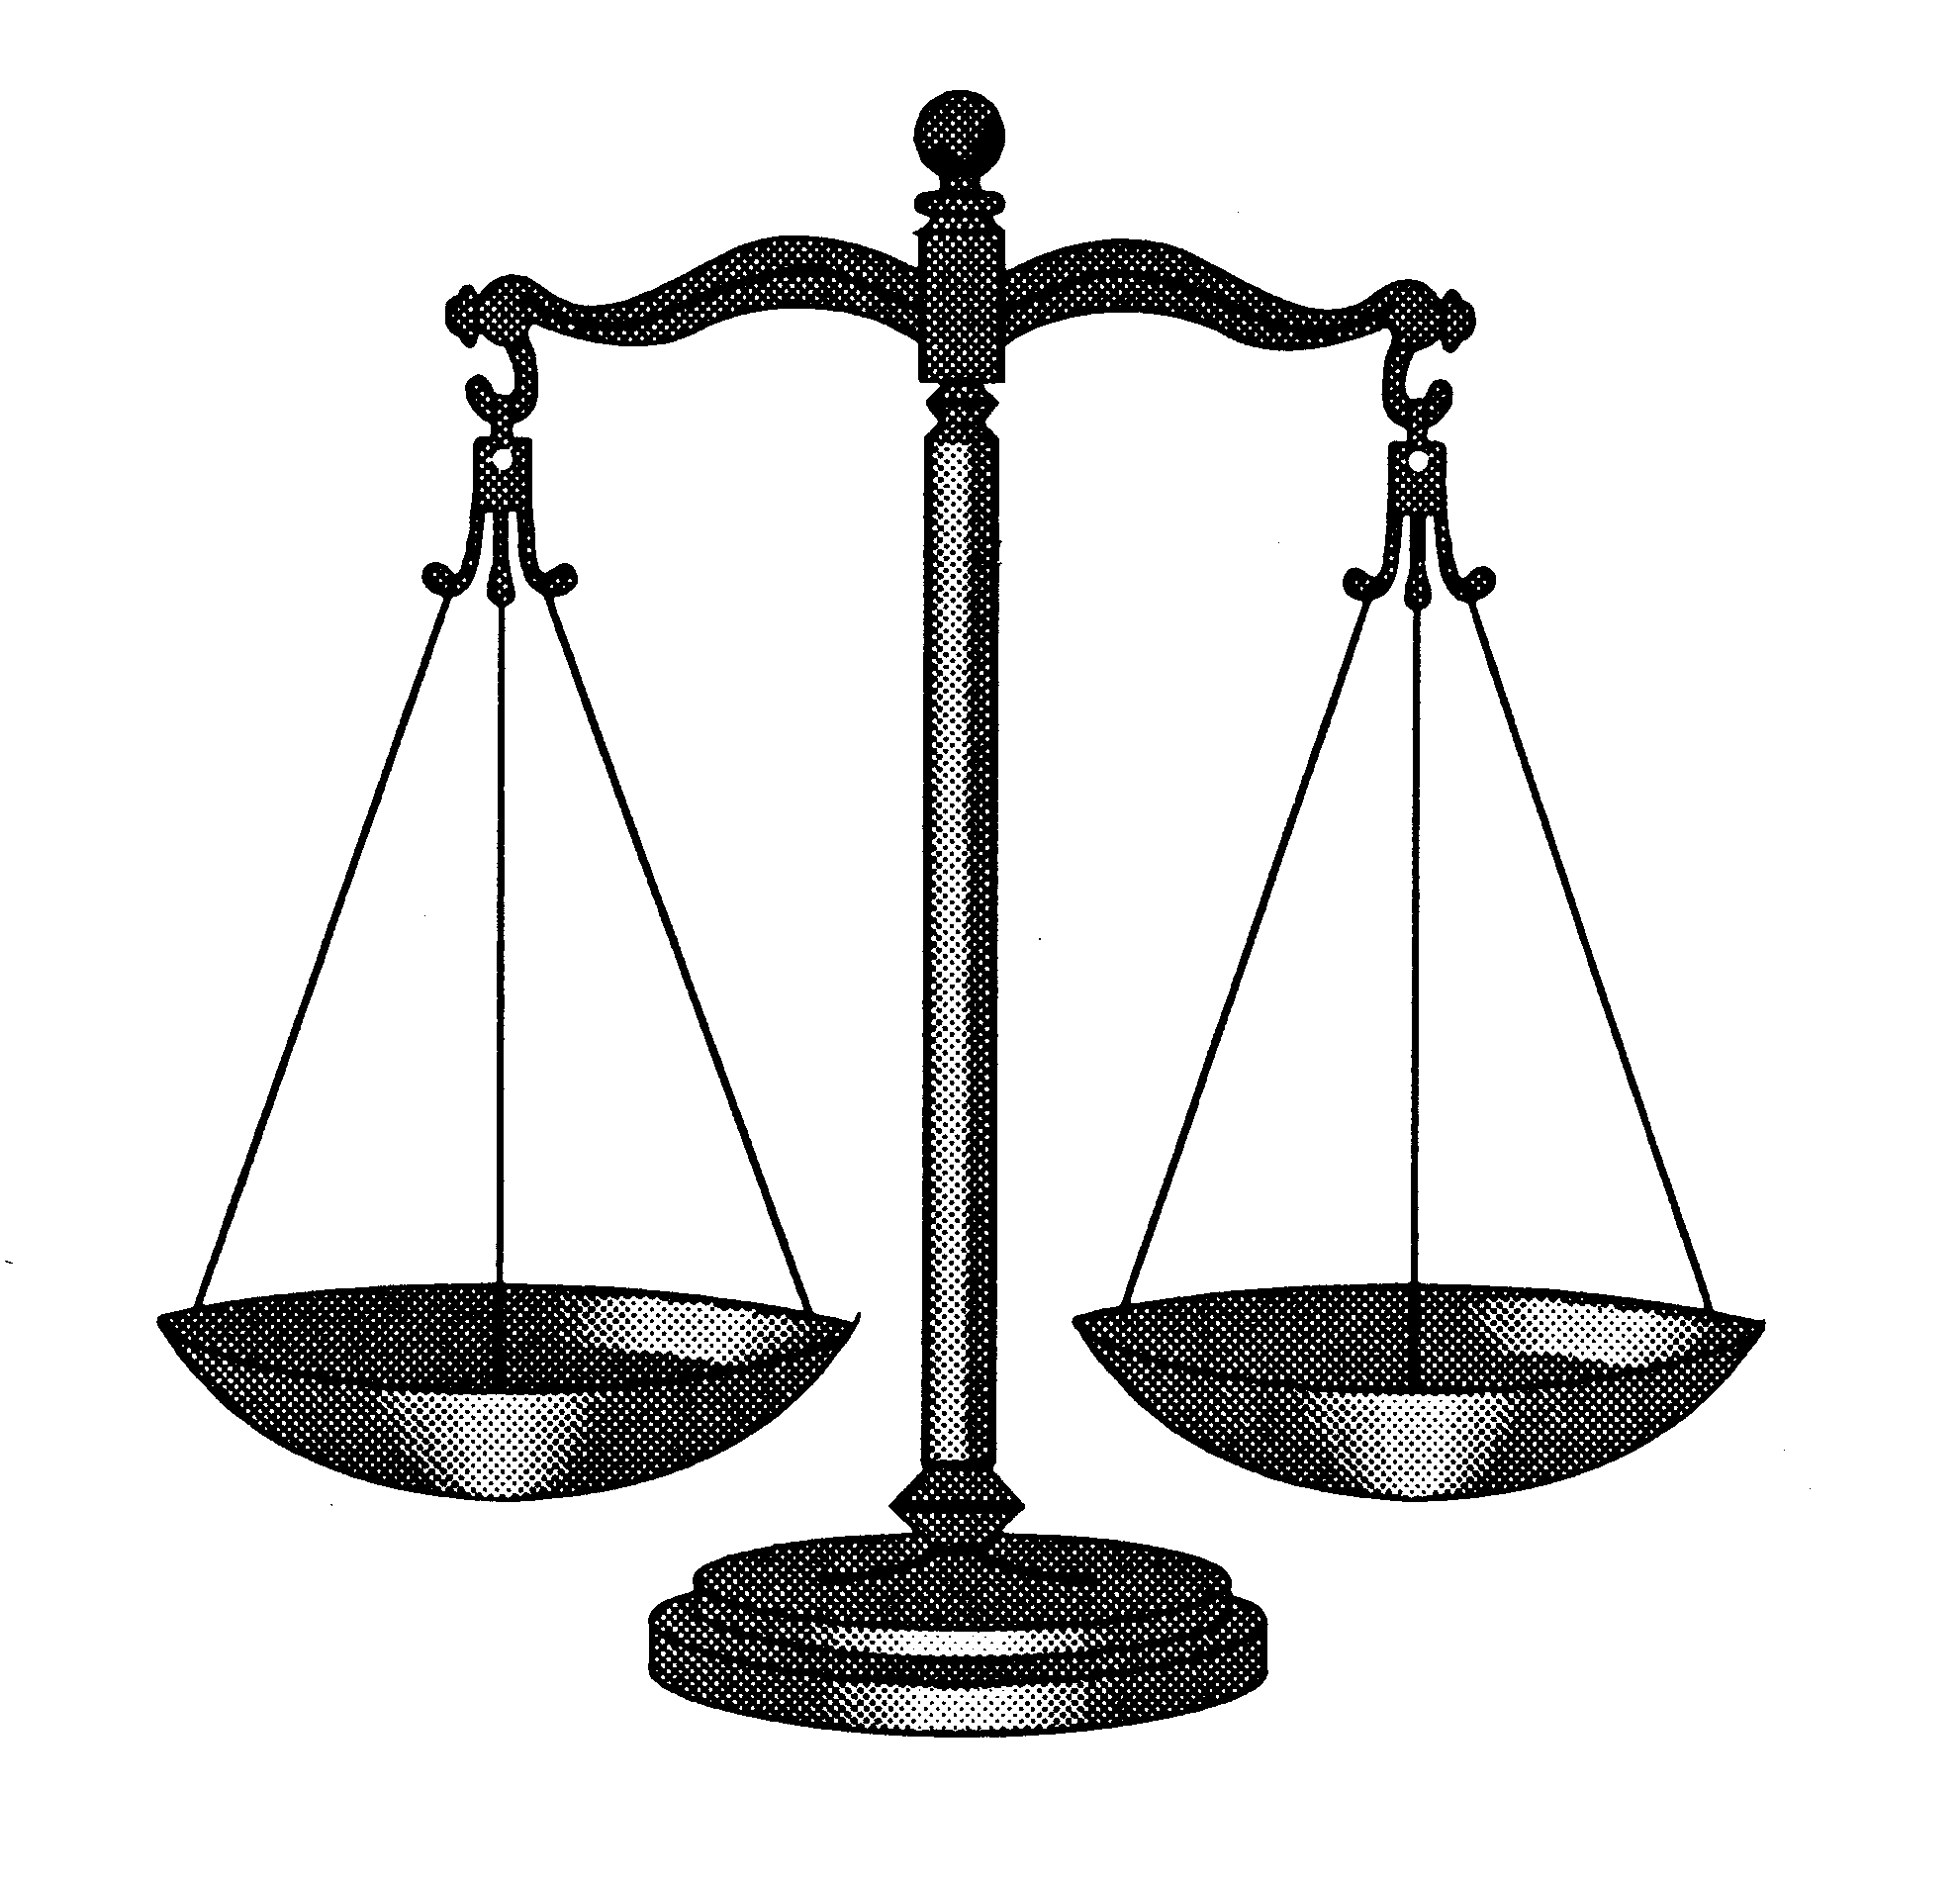 Justice Scales Vector | Free Download Clip Art | Free Clip Art ...